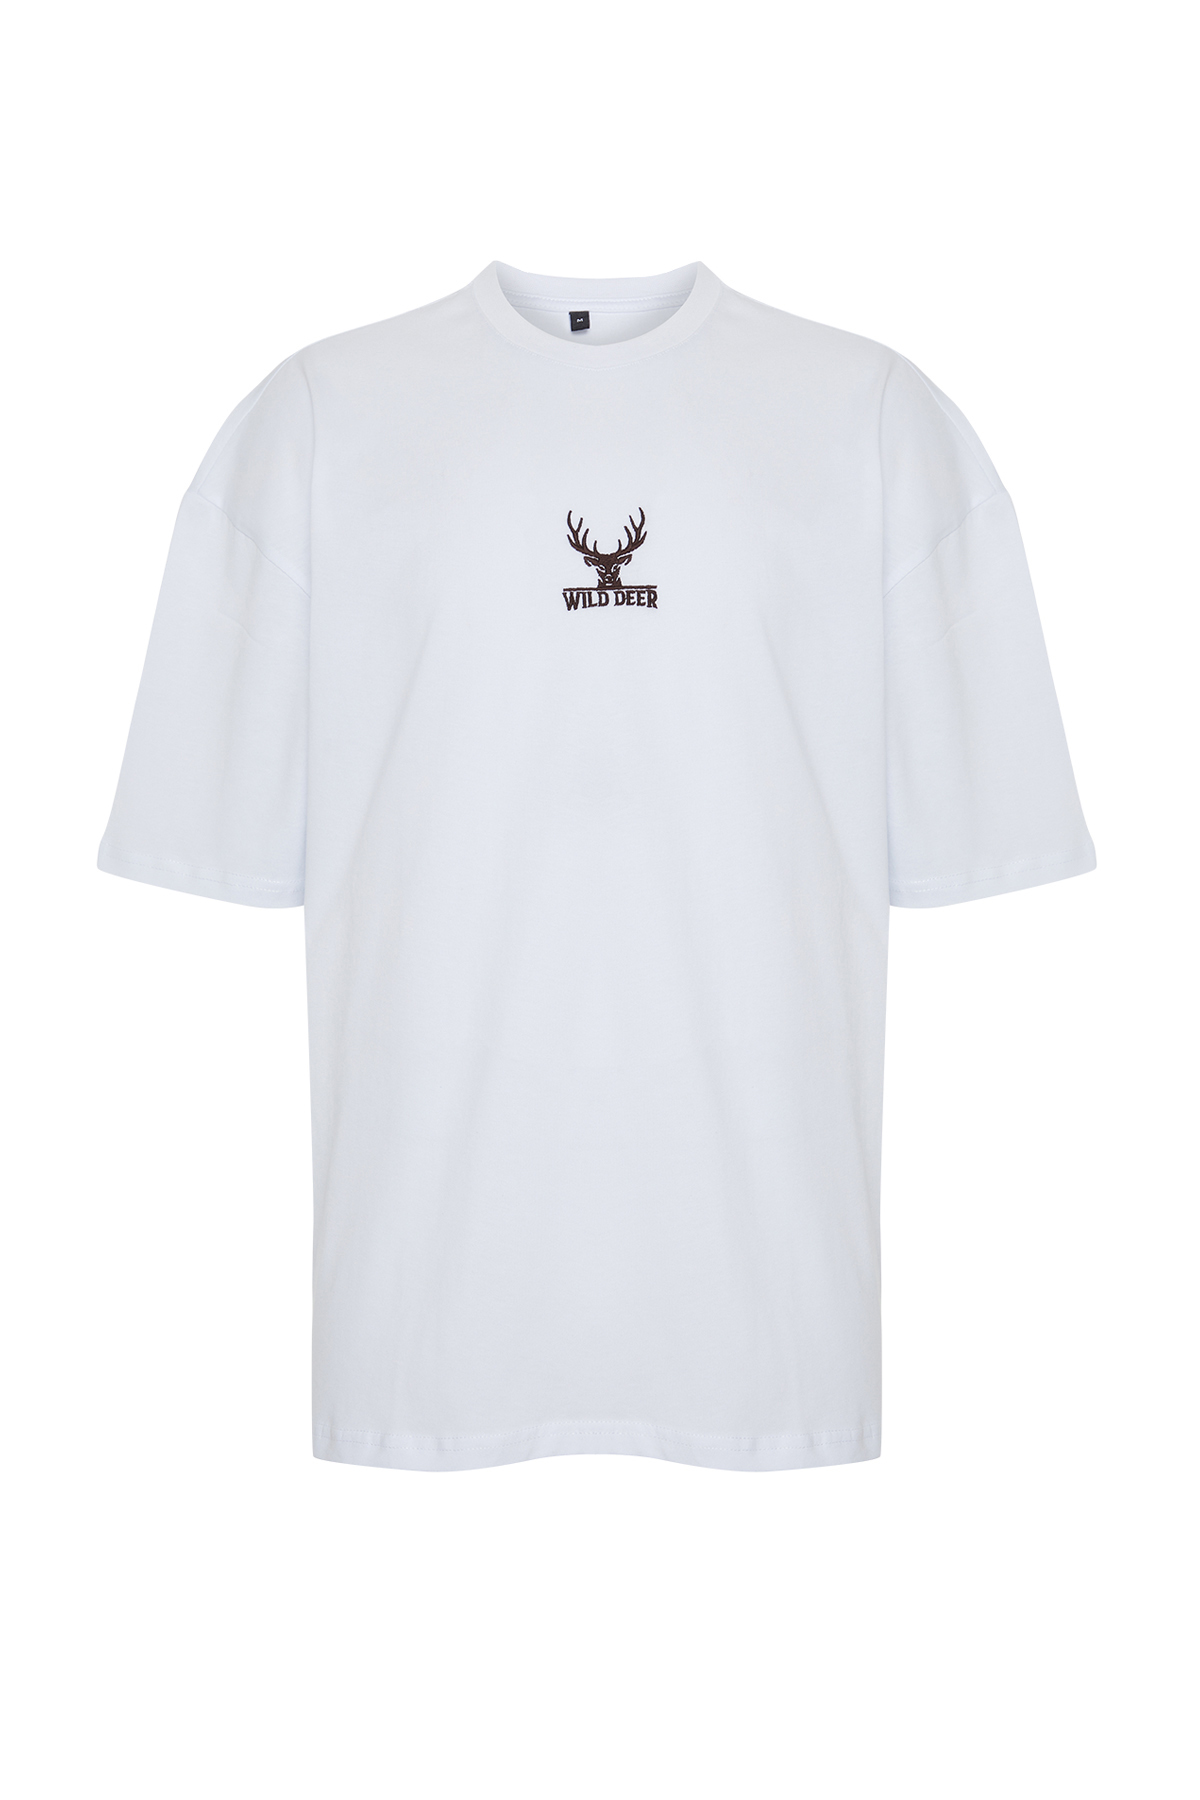 Trendyol Men's White Oversize Deer Embroidery 100% Cotton T-Shirt